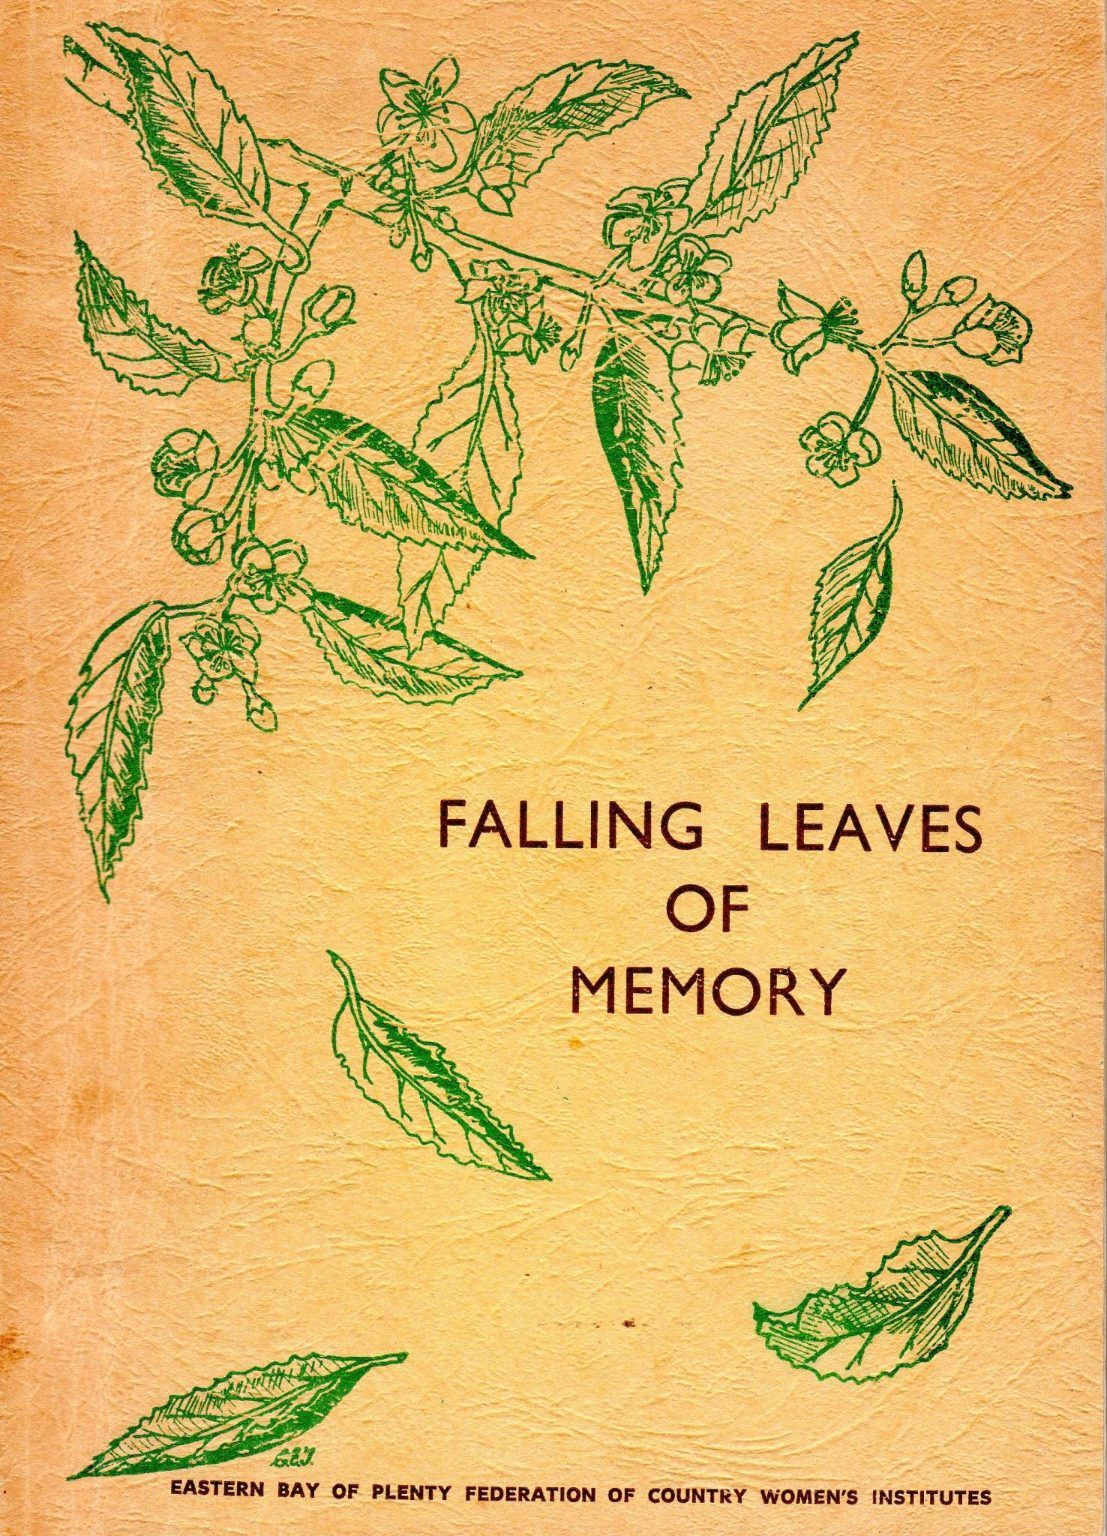 FALLING LEAVES OF MEMORY